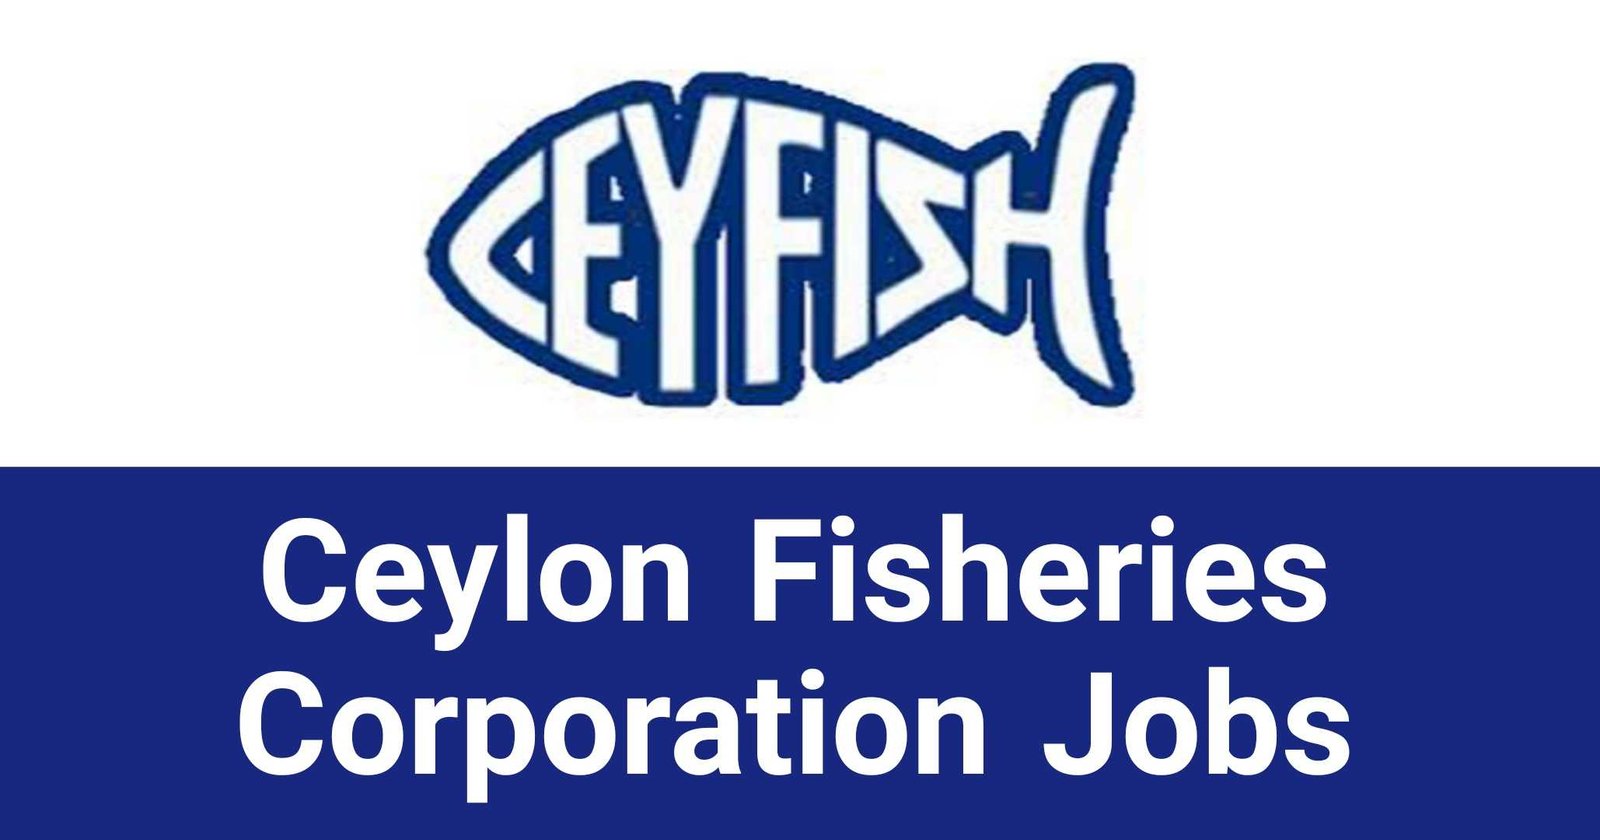 Ceylon Fisheries Corporation Jobs Vacancies Recruitments Applications